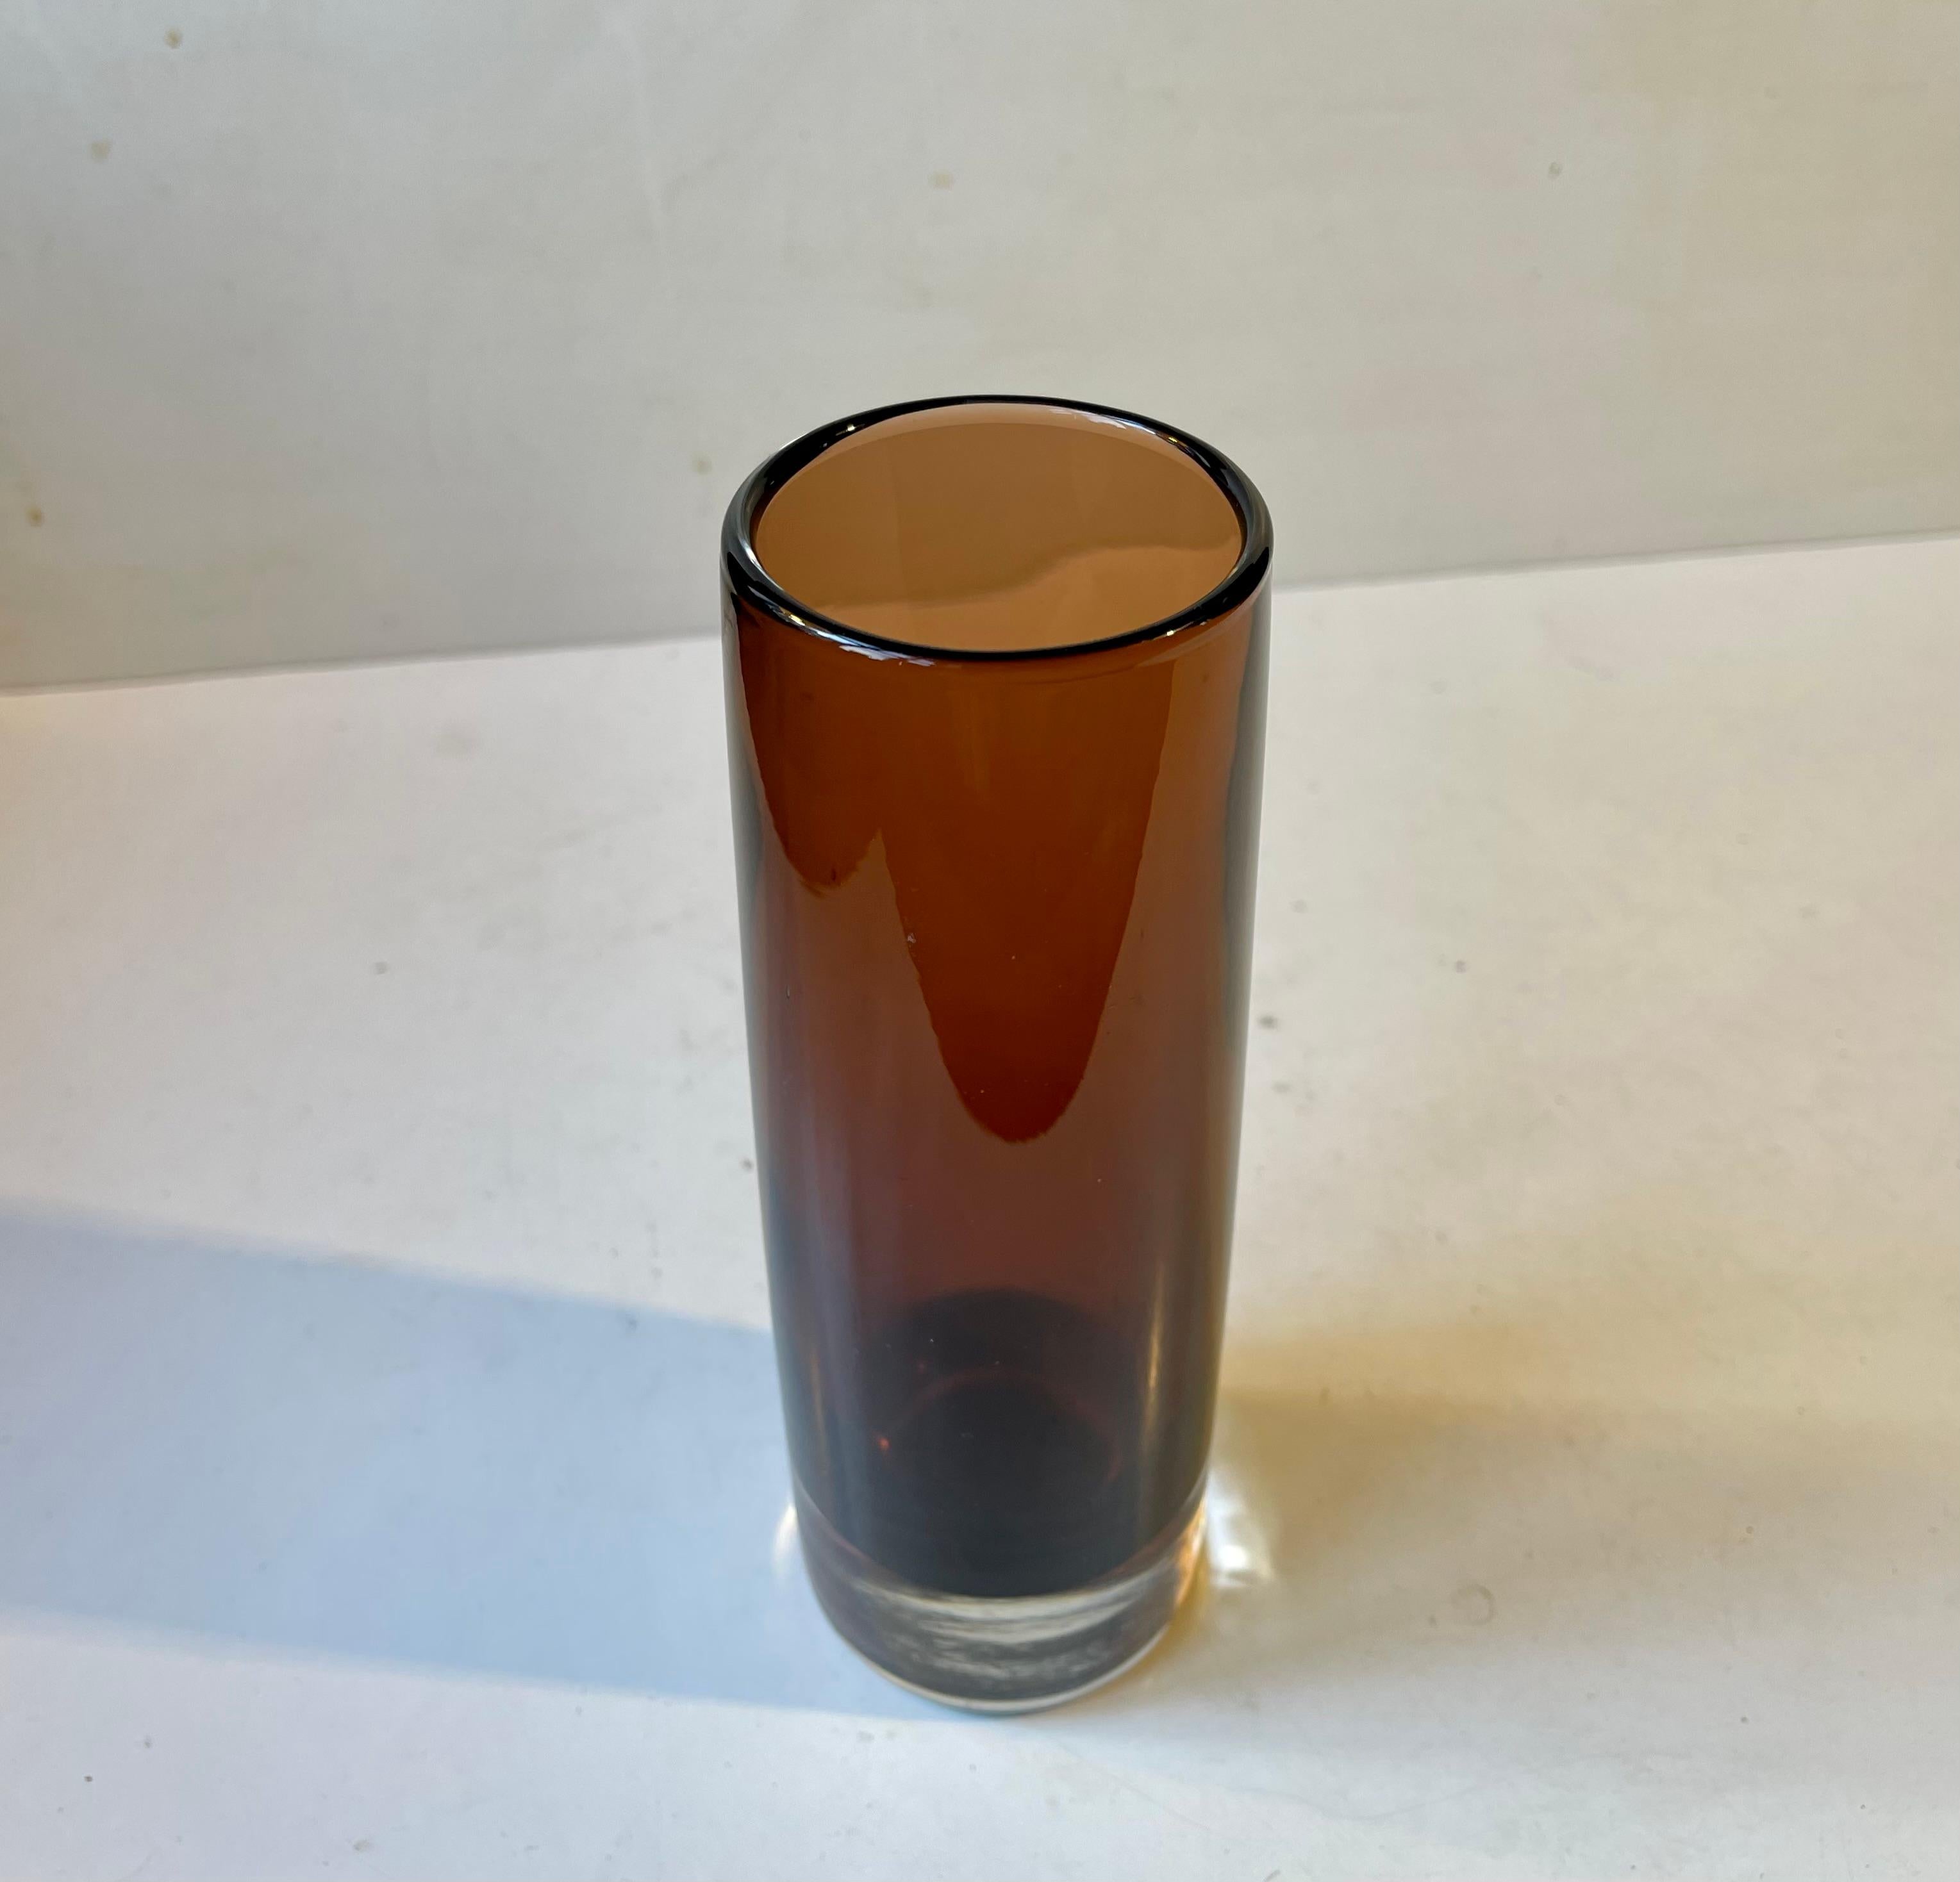 Vase cylindrique en verre brun café attribué à Tamara Aladin. Fabriqué par Riihimaen Lasi en Finlande vers 1970-75. Dimensions : H : 21 cm, Diamètre : 6,8 cm.